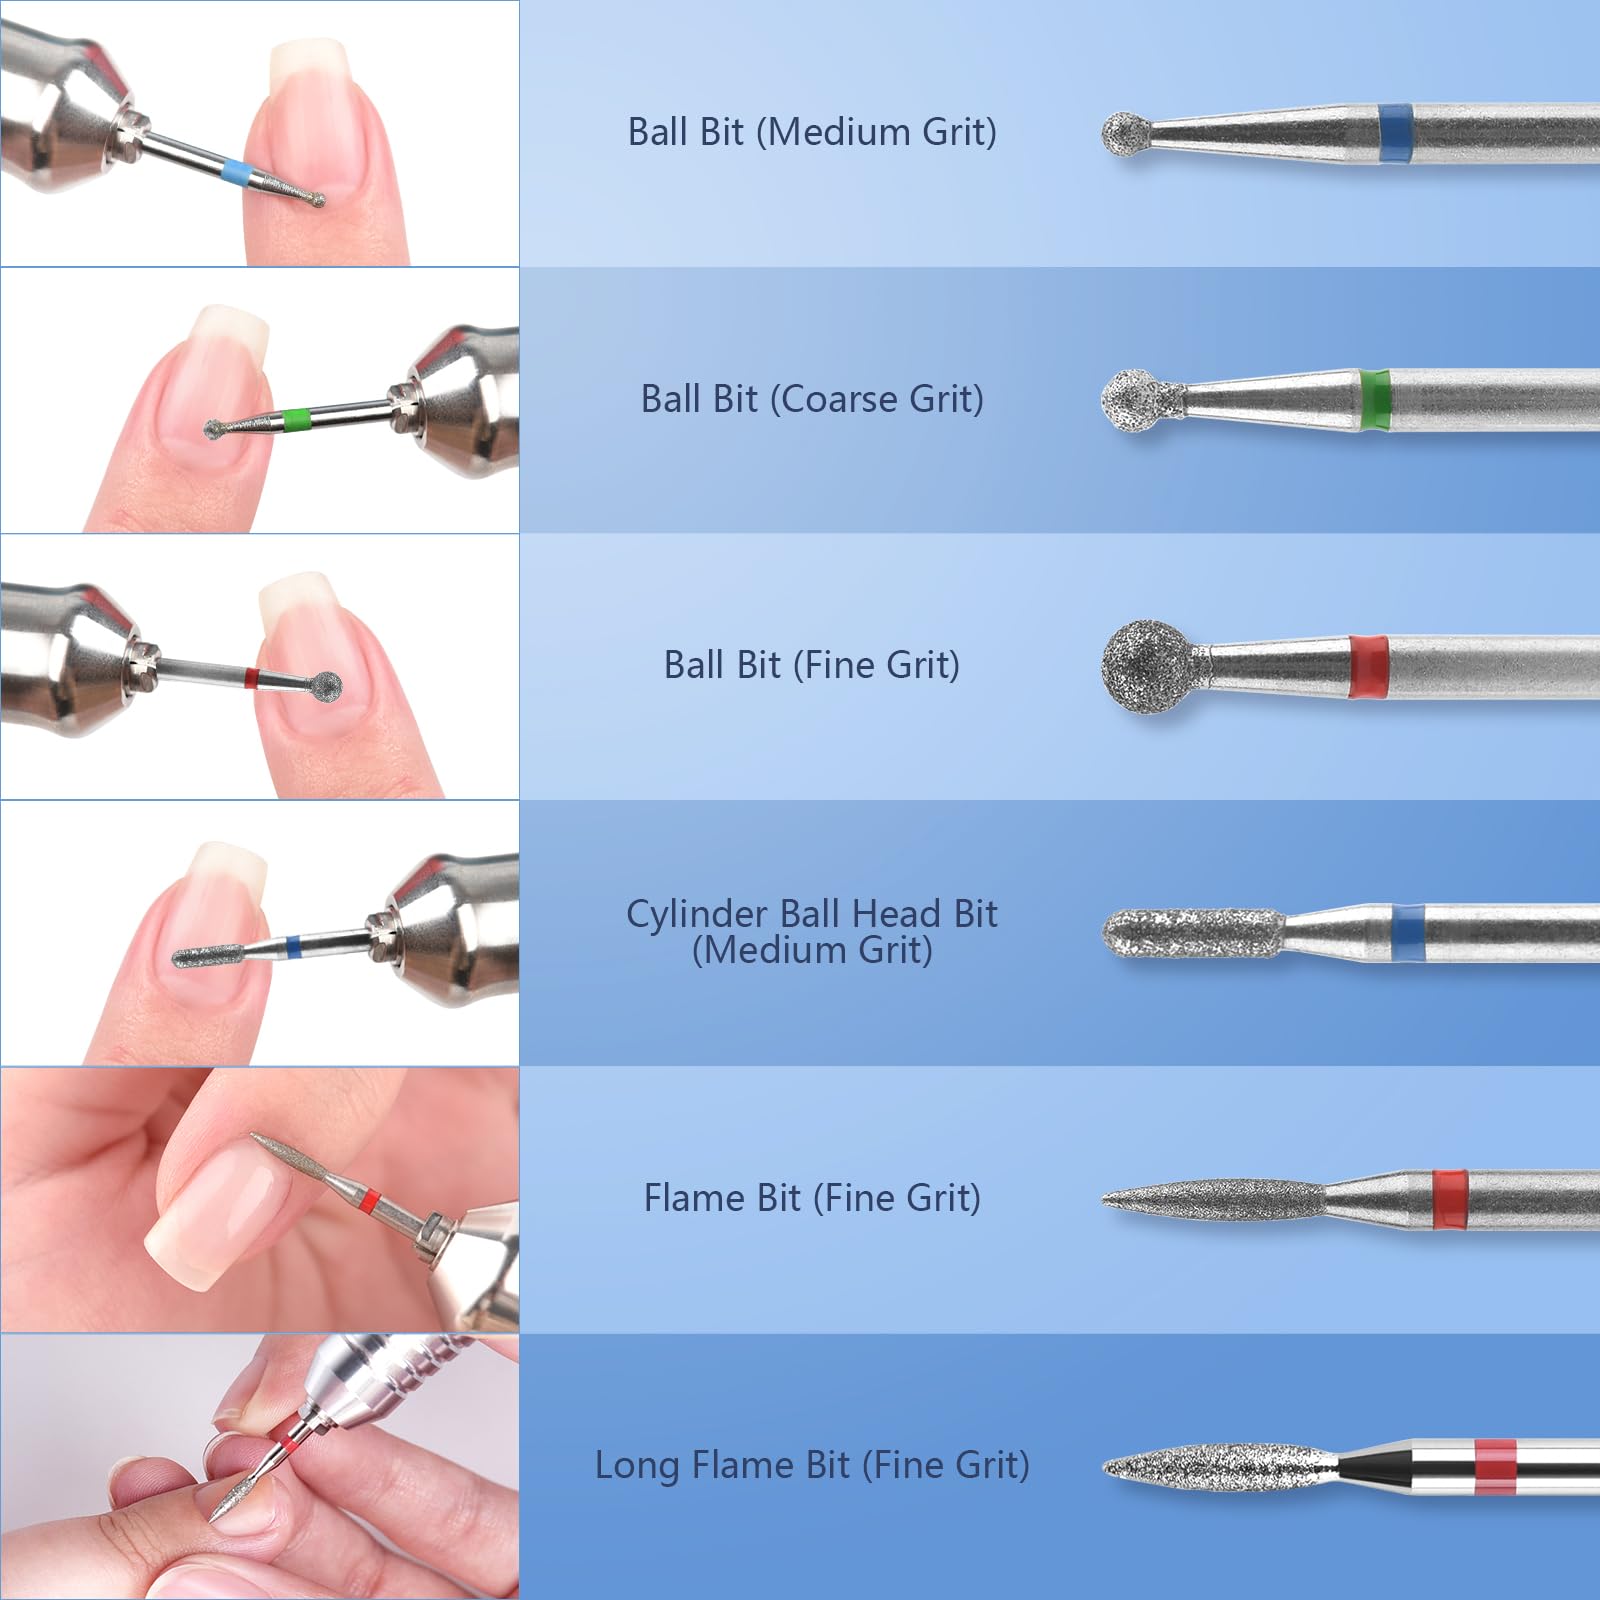 KADS 16pcs Nail Drill Bits Set, 3/32 Inch Diamond Cuticle Nail Bits Kit for Nail Drill E-File, Manicure Pedicure Remover Tools for Acrylic Gel Nails, Salon Home Nail Care Supplies, Silver